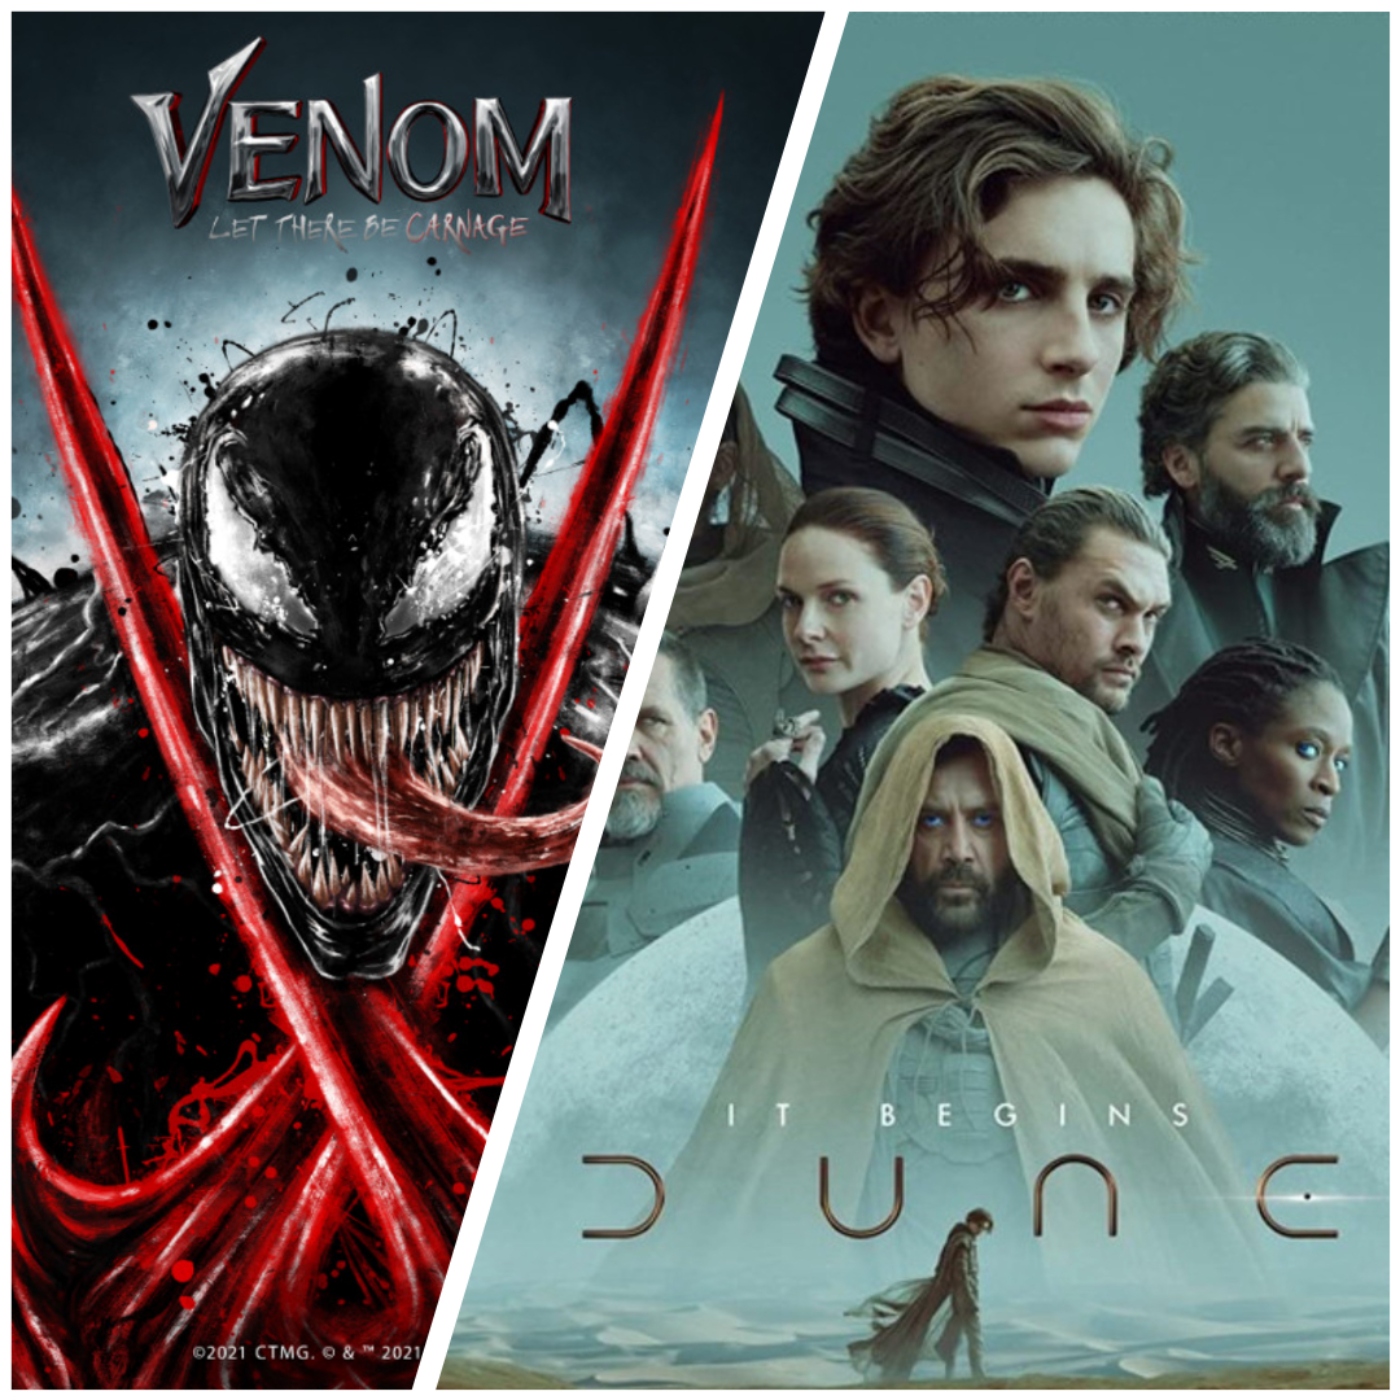 Venom and Dune Review + other TV shows - مراجعة فيلم فينوم وديون ومجموعة أعمال تانية